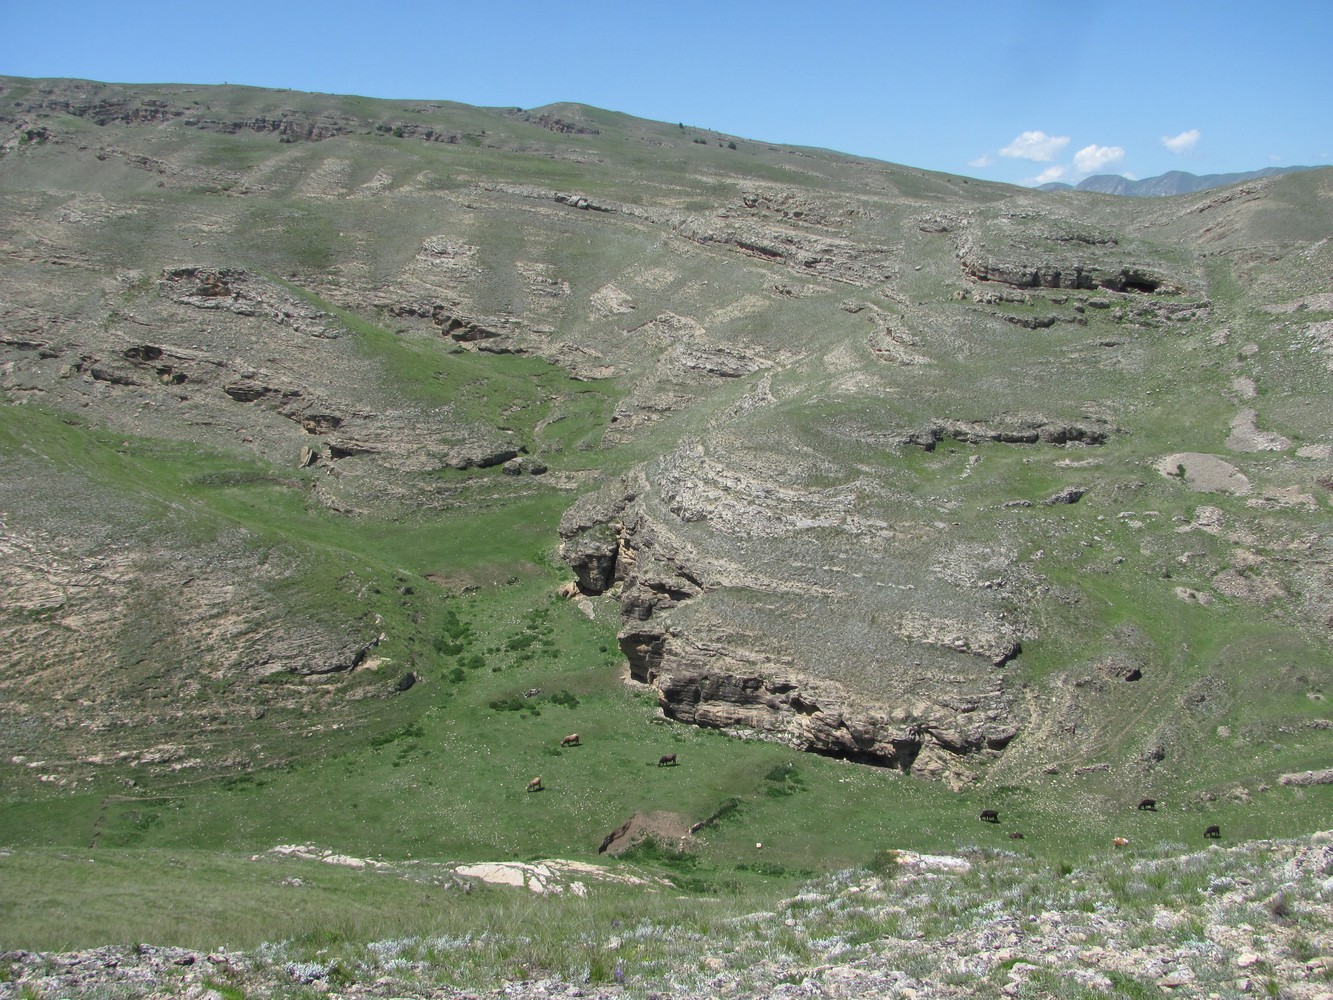 Леваши, image of landscape/habitat.